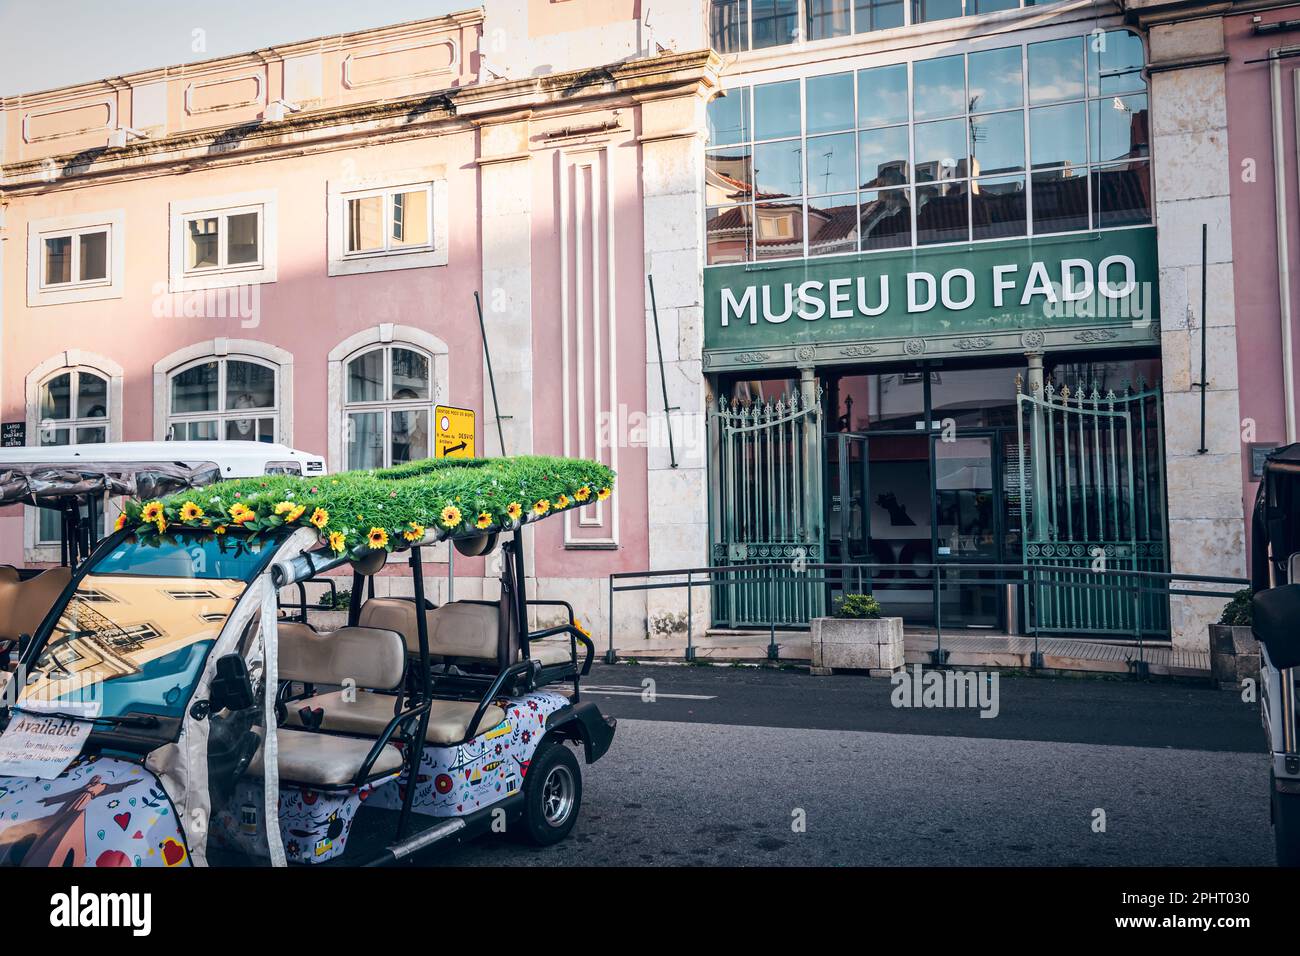 Fado Museum in Lisbon. Stock Photo